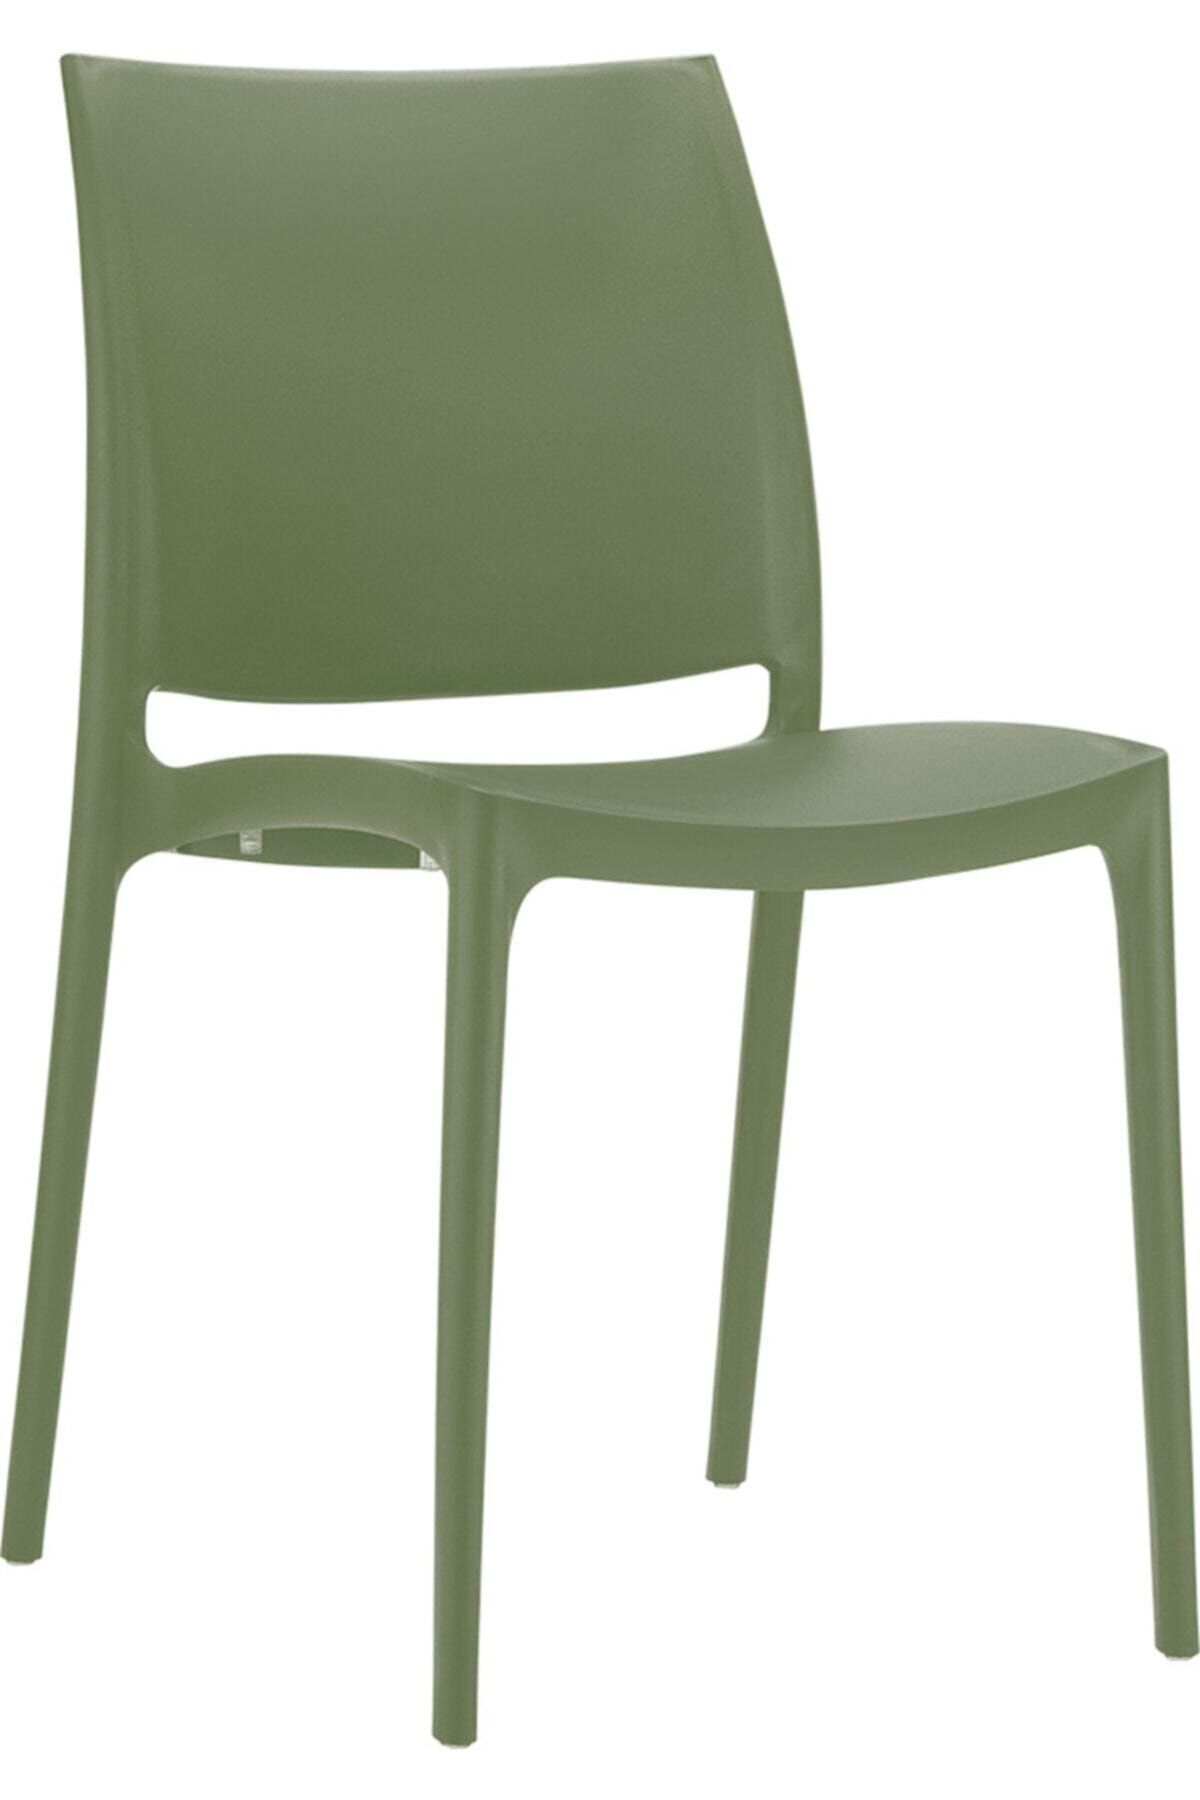 Siesta Maya Sandalye Zeytin Yeşili